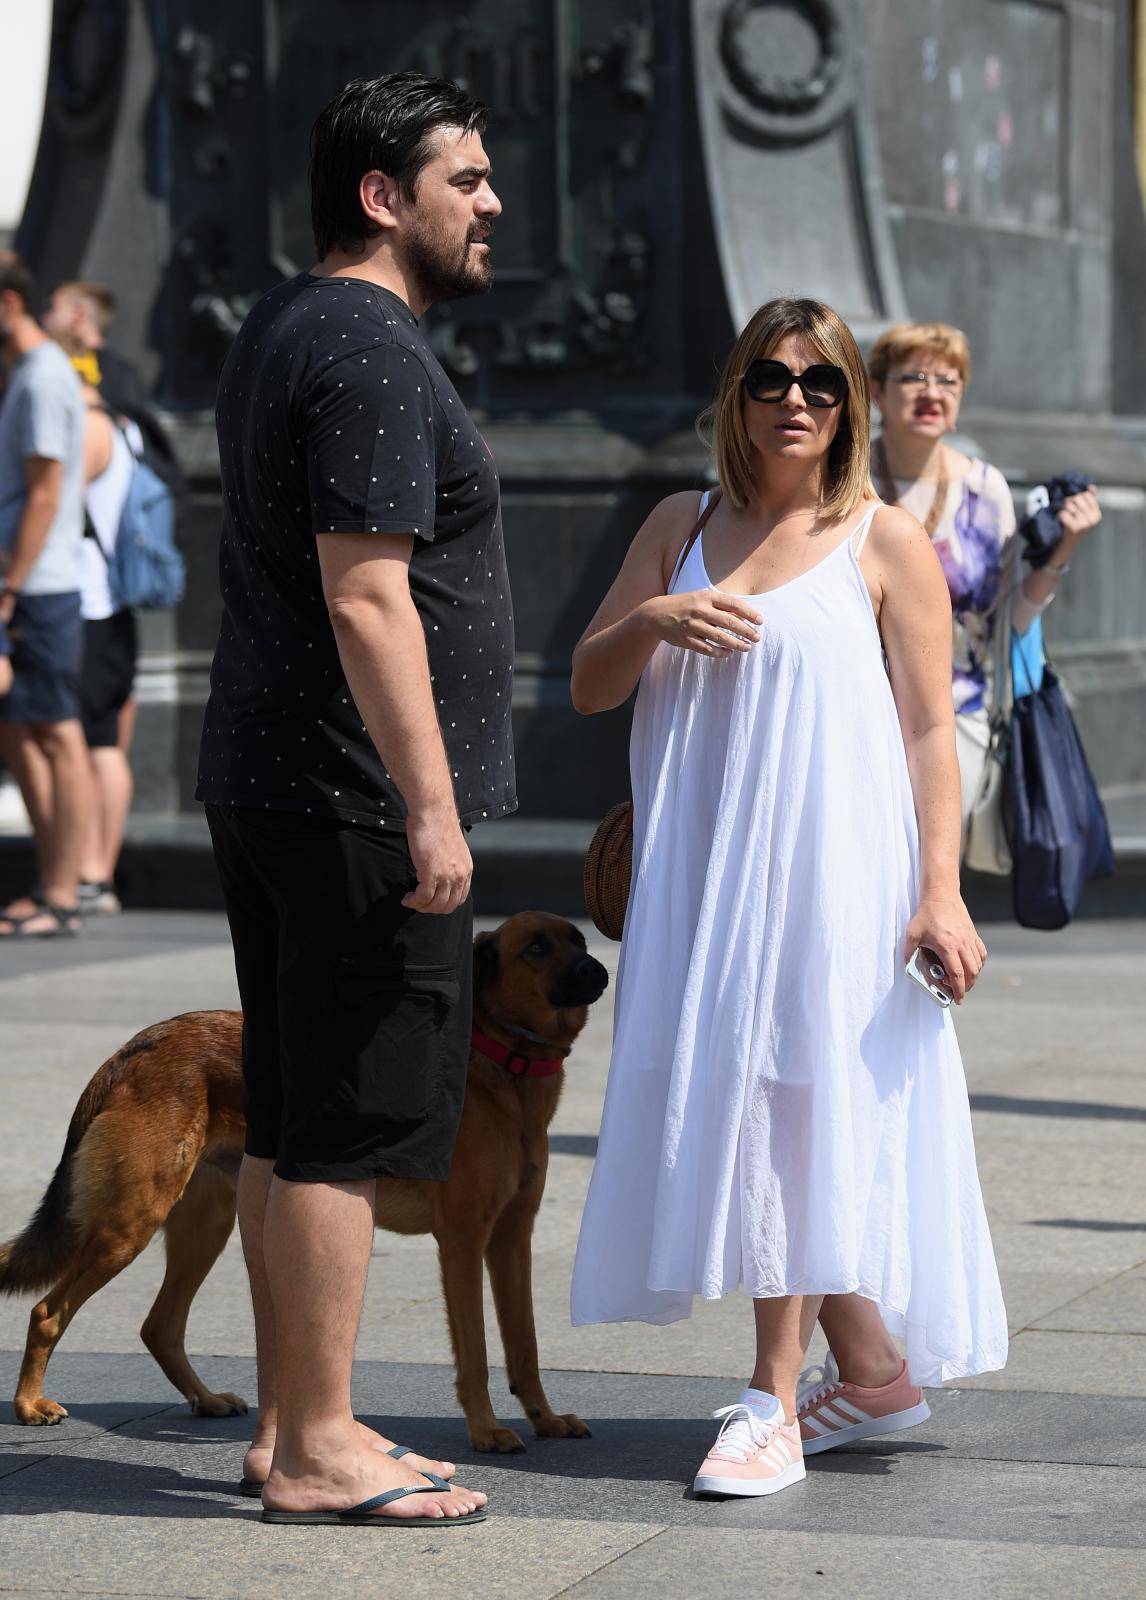 Zagreb: Antonija BlaÄe sa suprugom Hrvojem i psom u Å¡etnji gradom